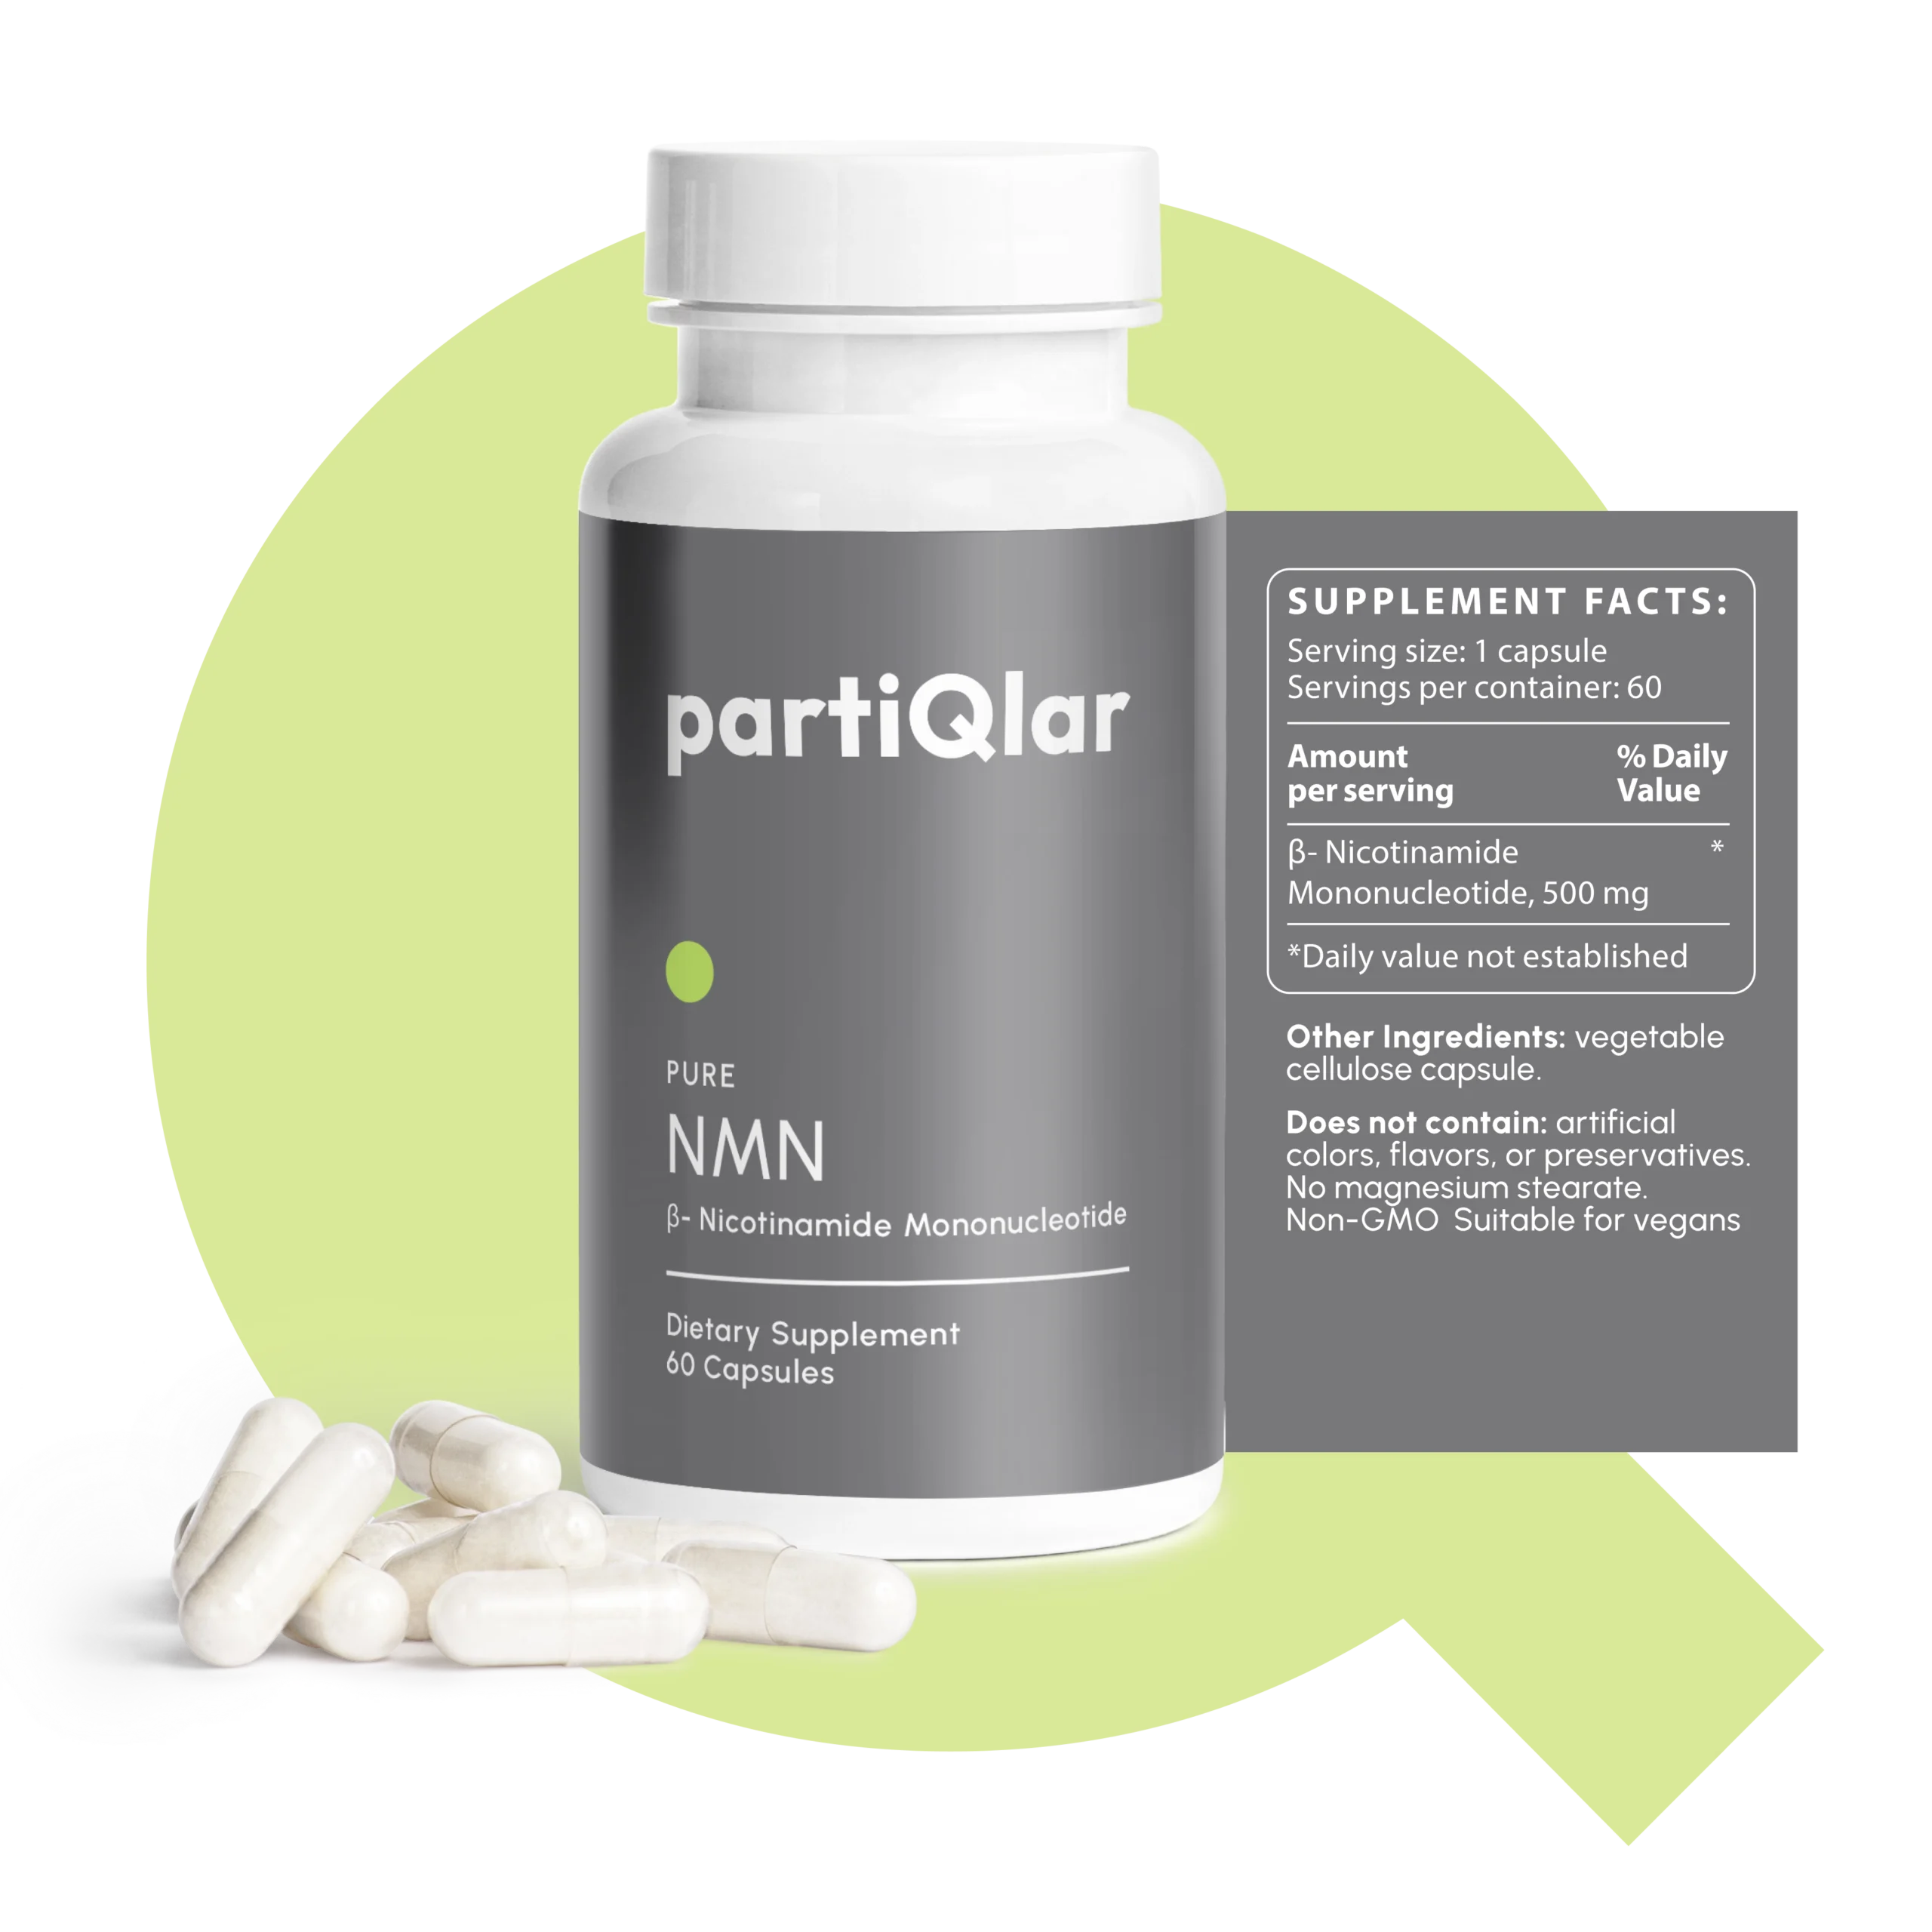 partiQlar best NAD+ booster supplement facts